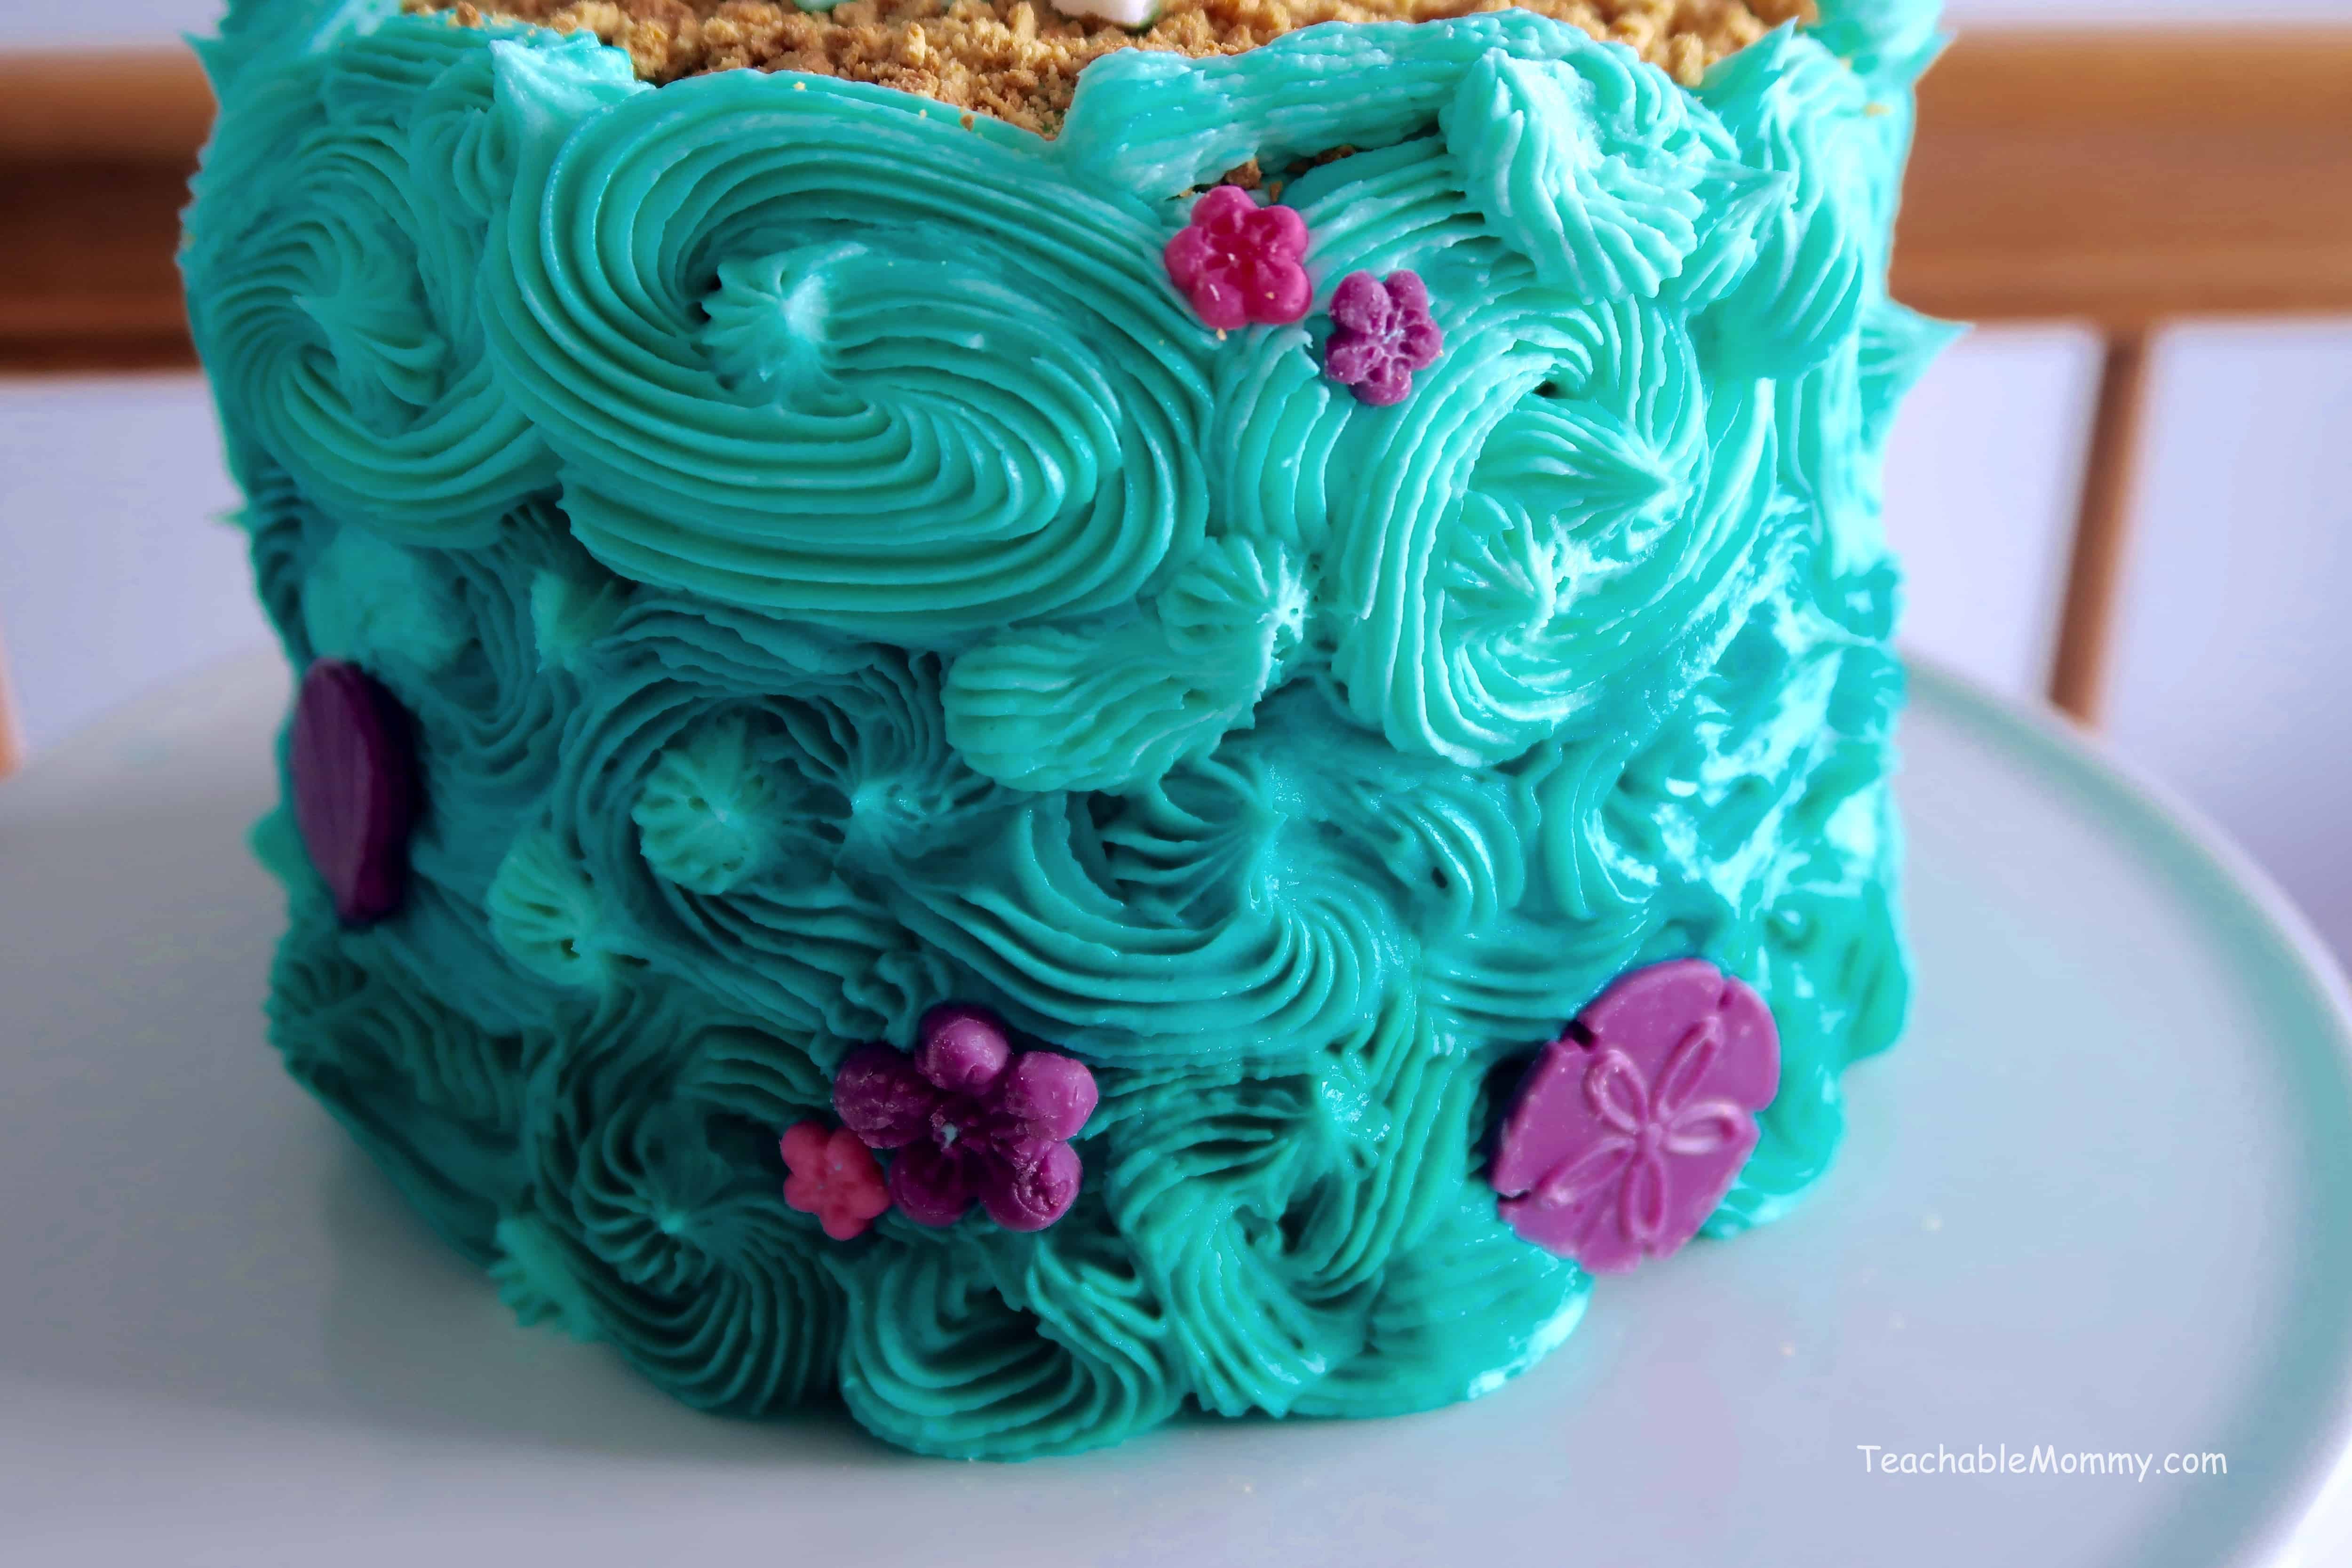 15 Beautiful Moana Birthday Cake Ideas (This is a Must for the Party) |  Moana birthday party cake, Moana birthday cake, Moana cake